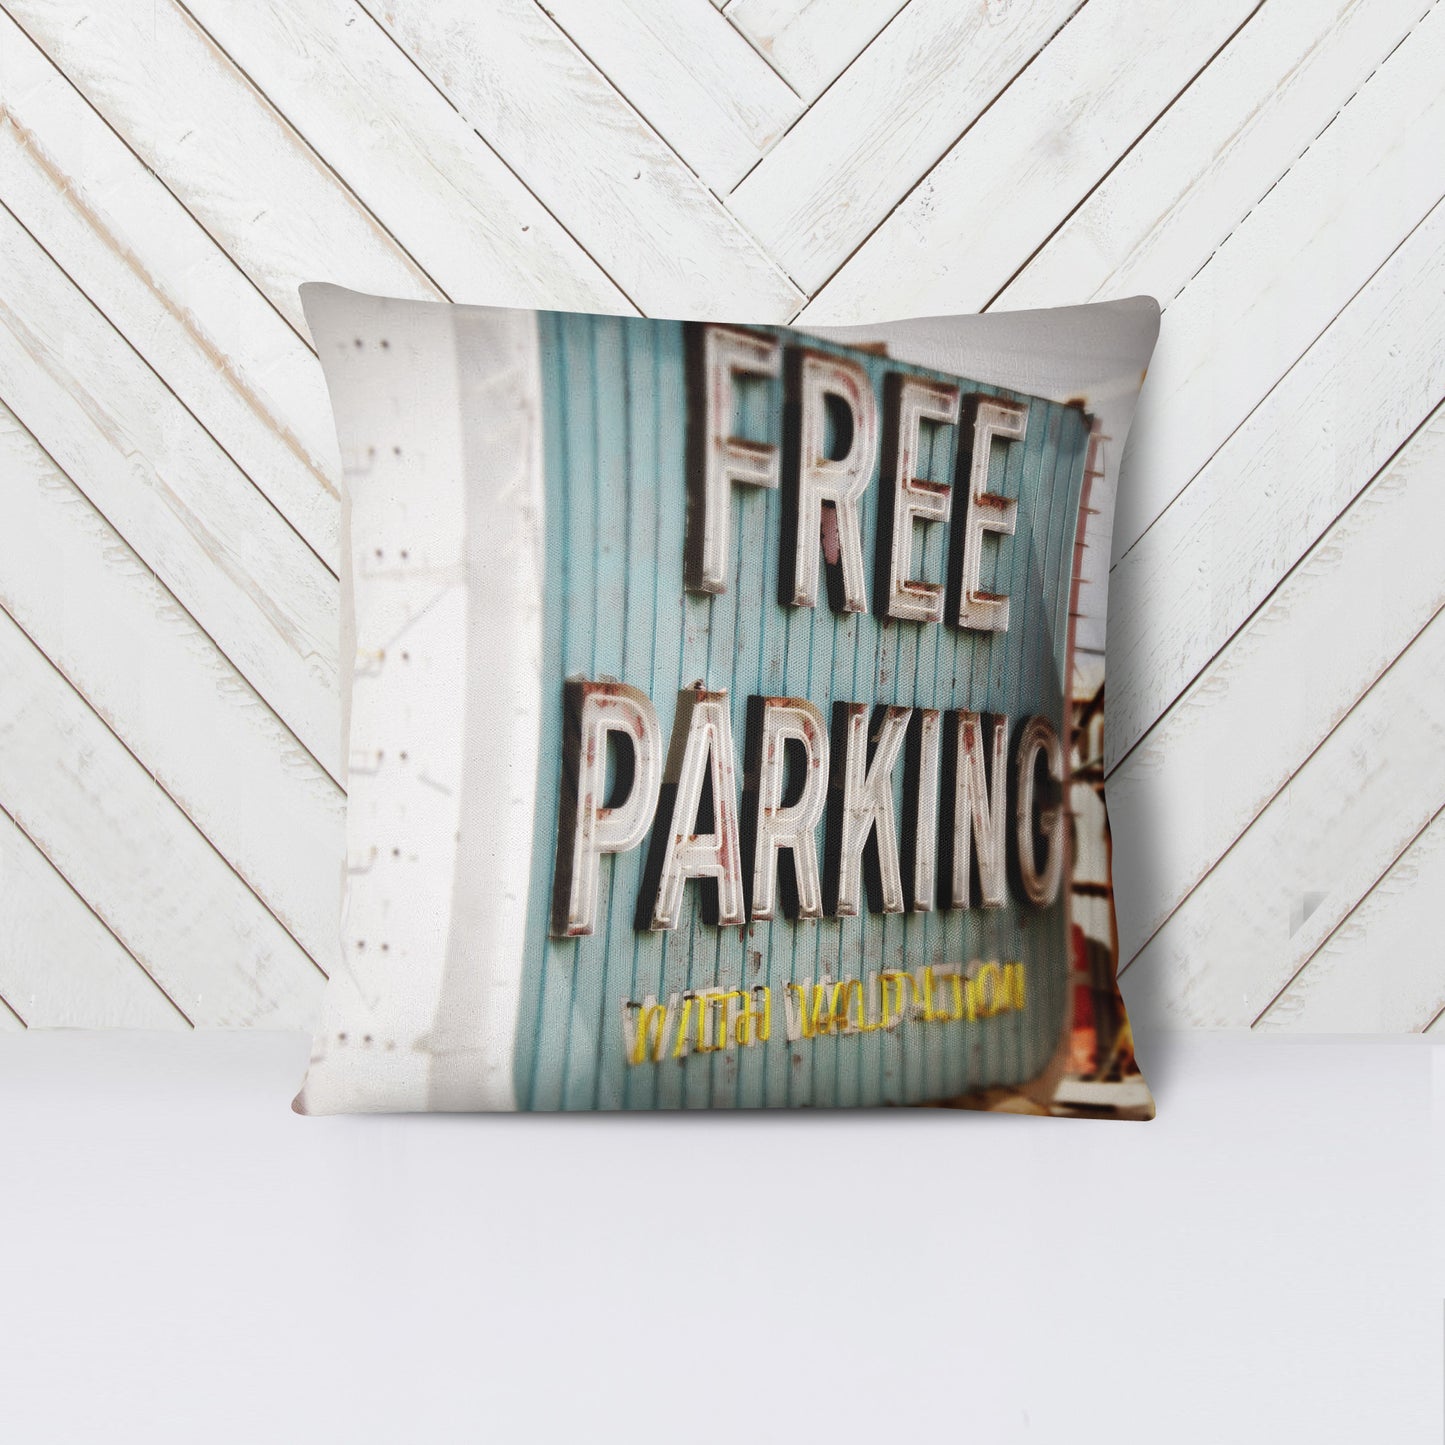 FREE PARKING Throw Pillow